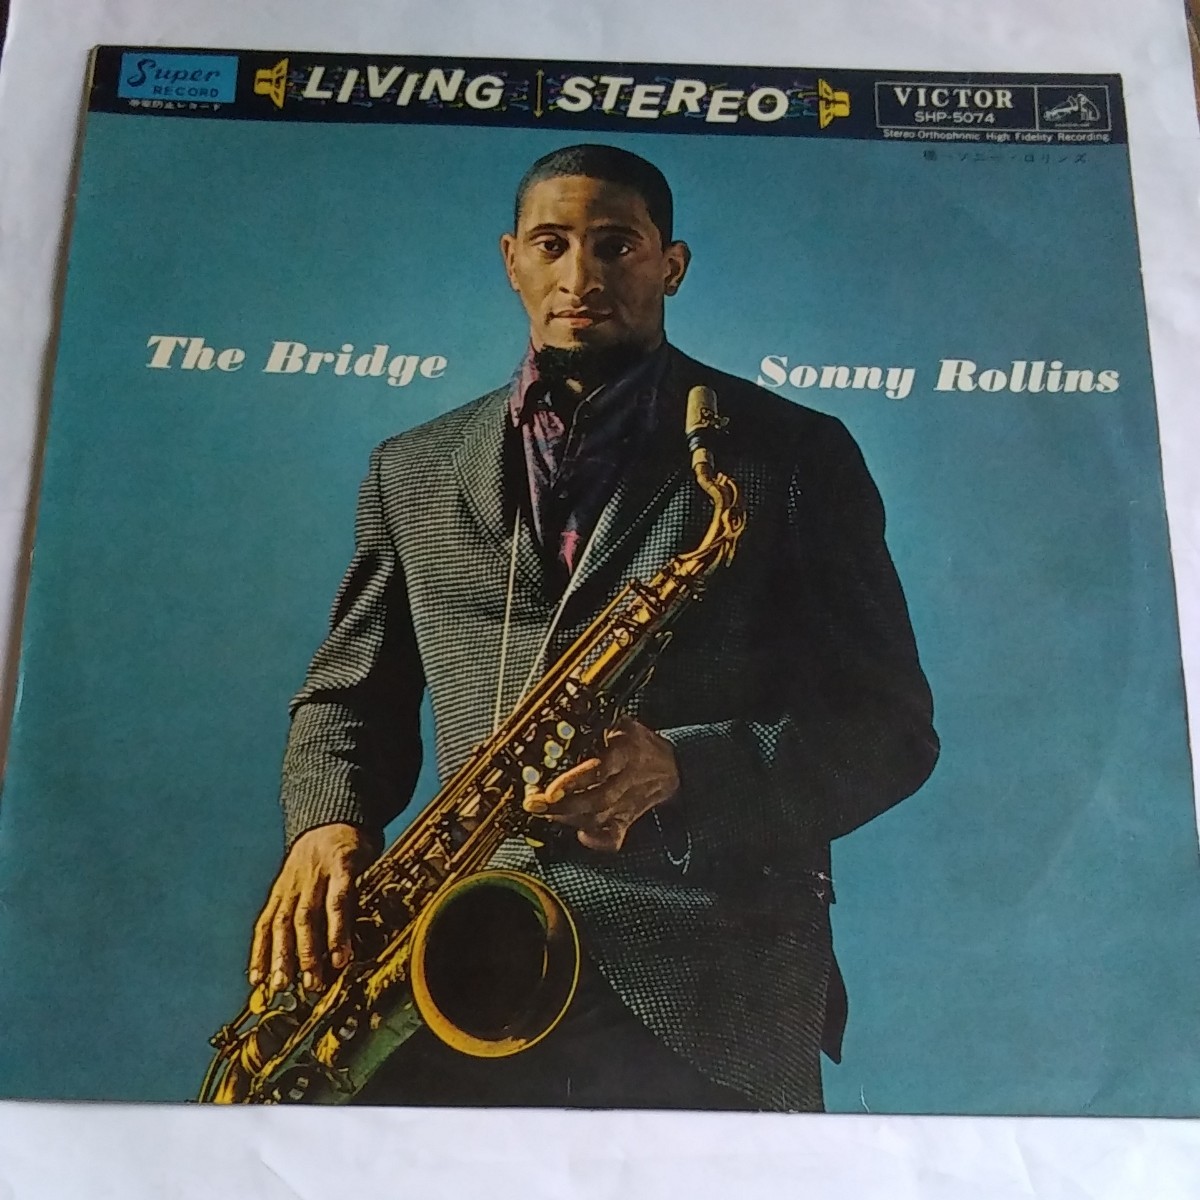 The Bridge Sonny Rollins Super RECORDS LIVING STEREO VICTOR SHP-5074 「橋～ソニー・ロリンズ」LIVING STEREO SHP-5074¥1,800_画像1